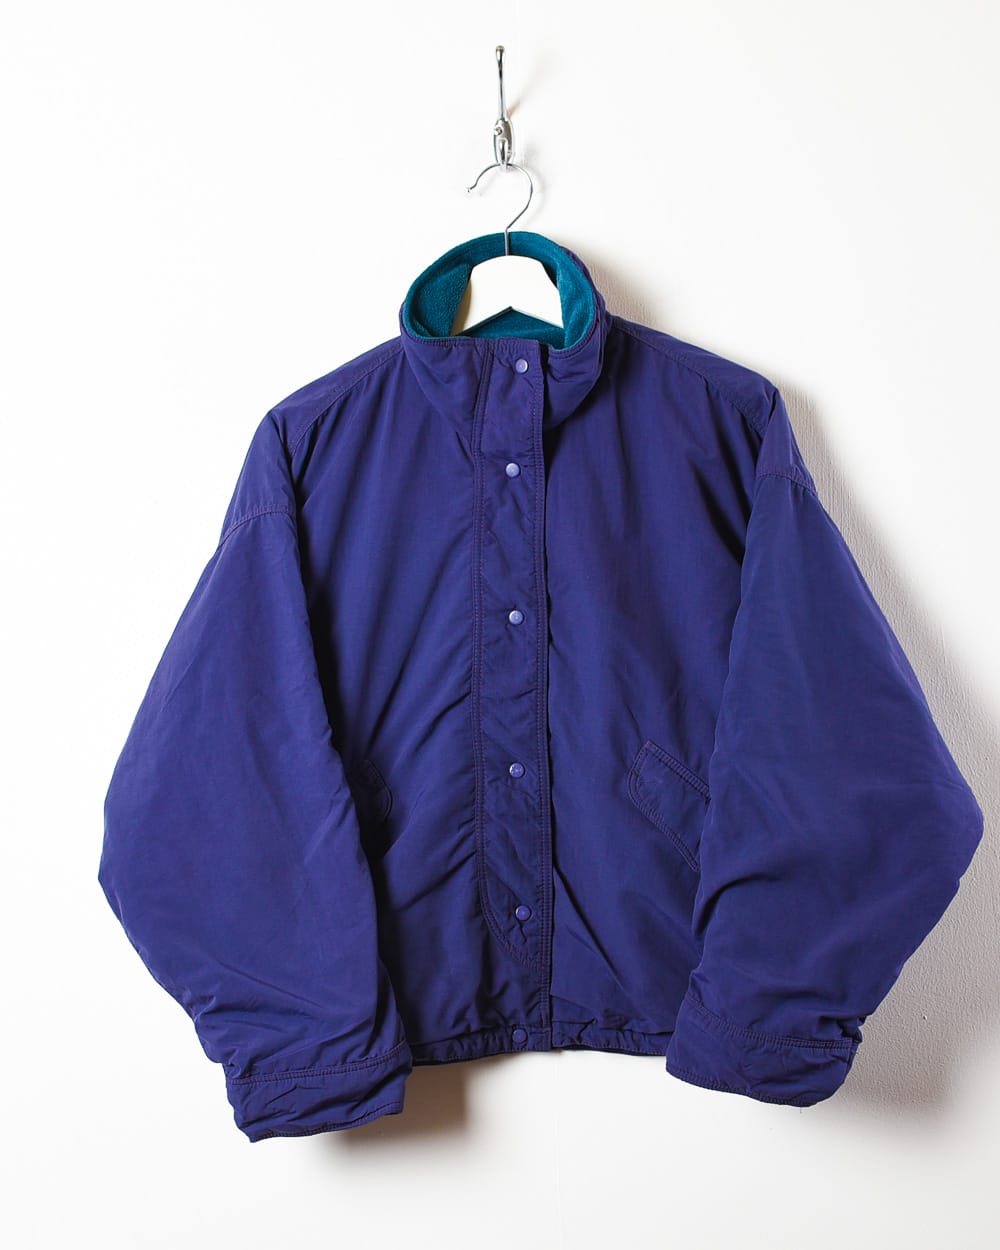 Purple Patagonia Fleece Lined Jacket - Small Women's